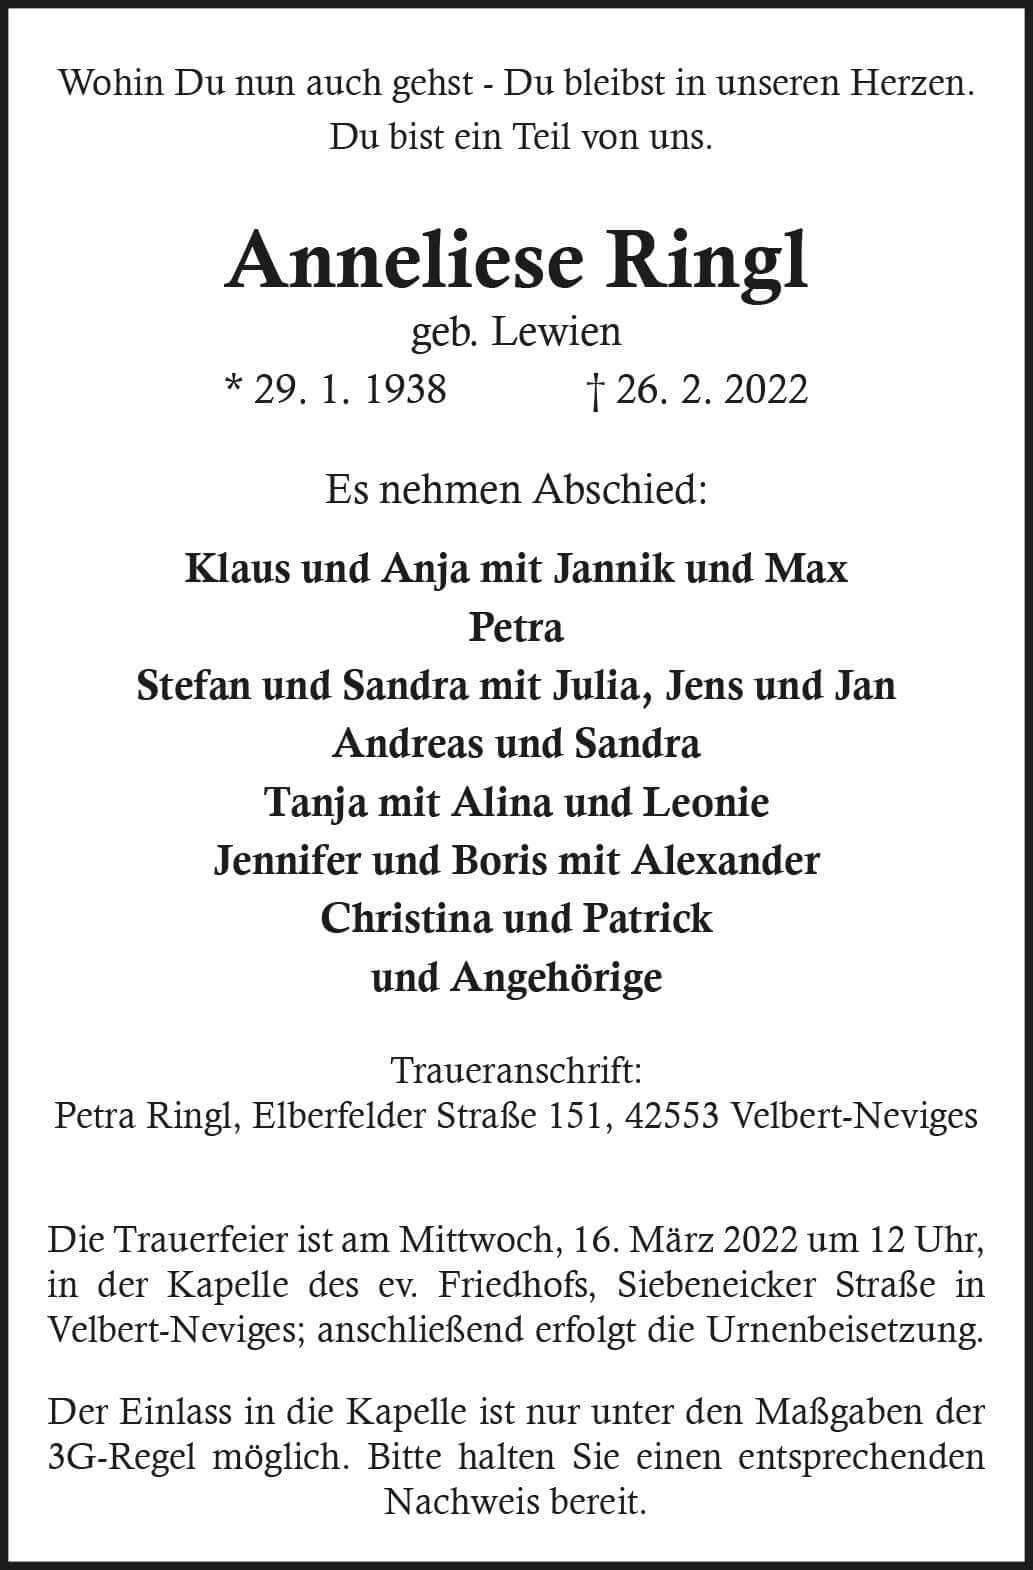 Anneliese Ringl †26. 2. 2022